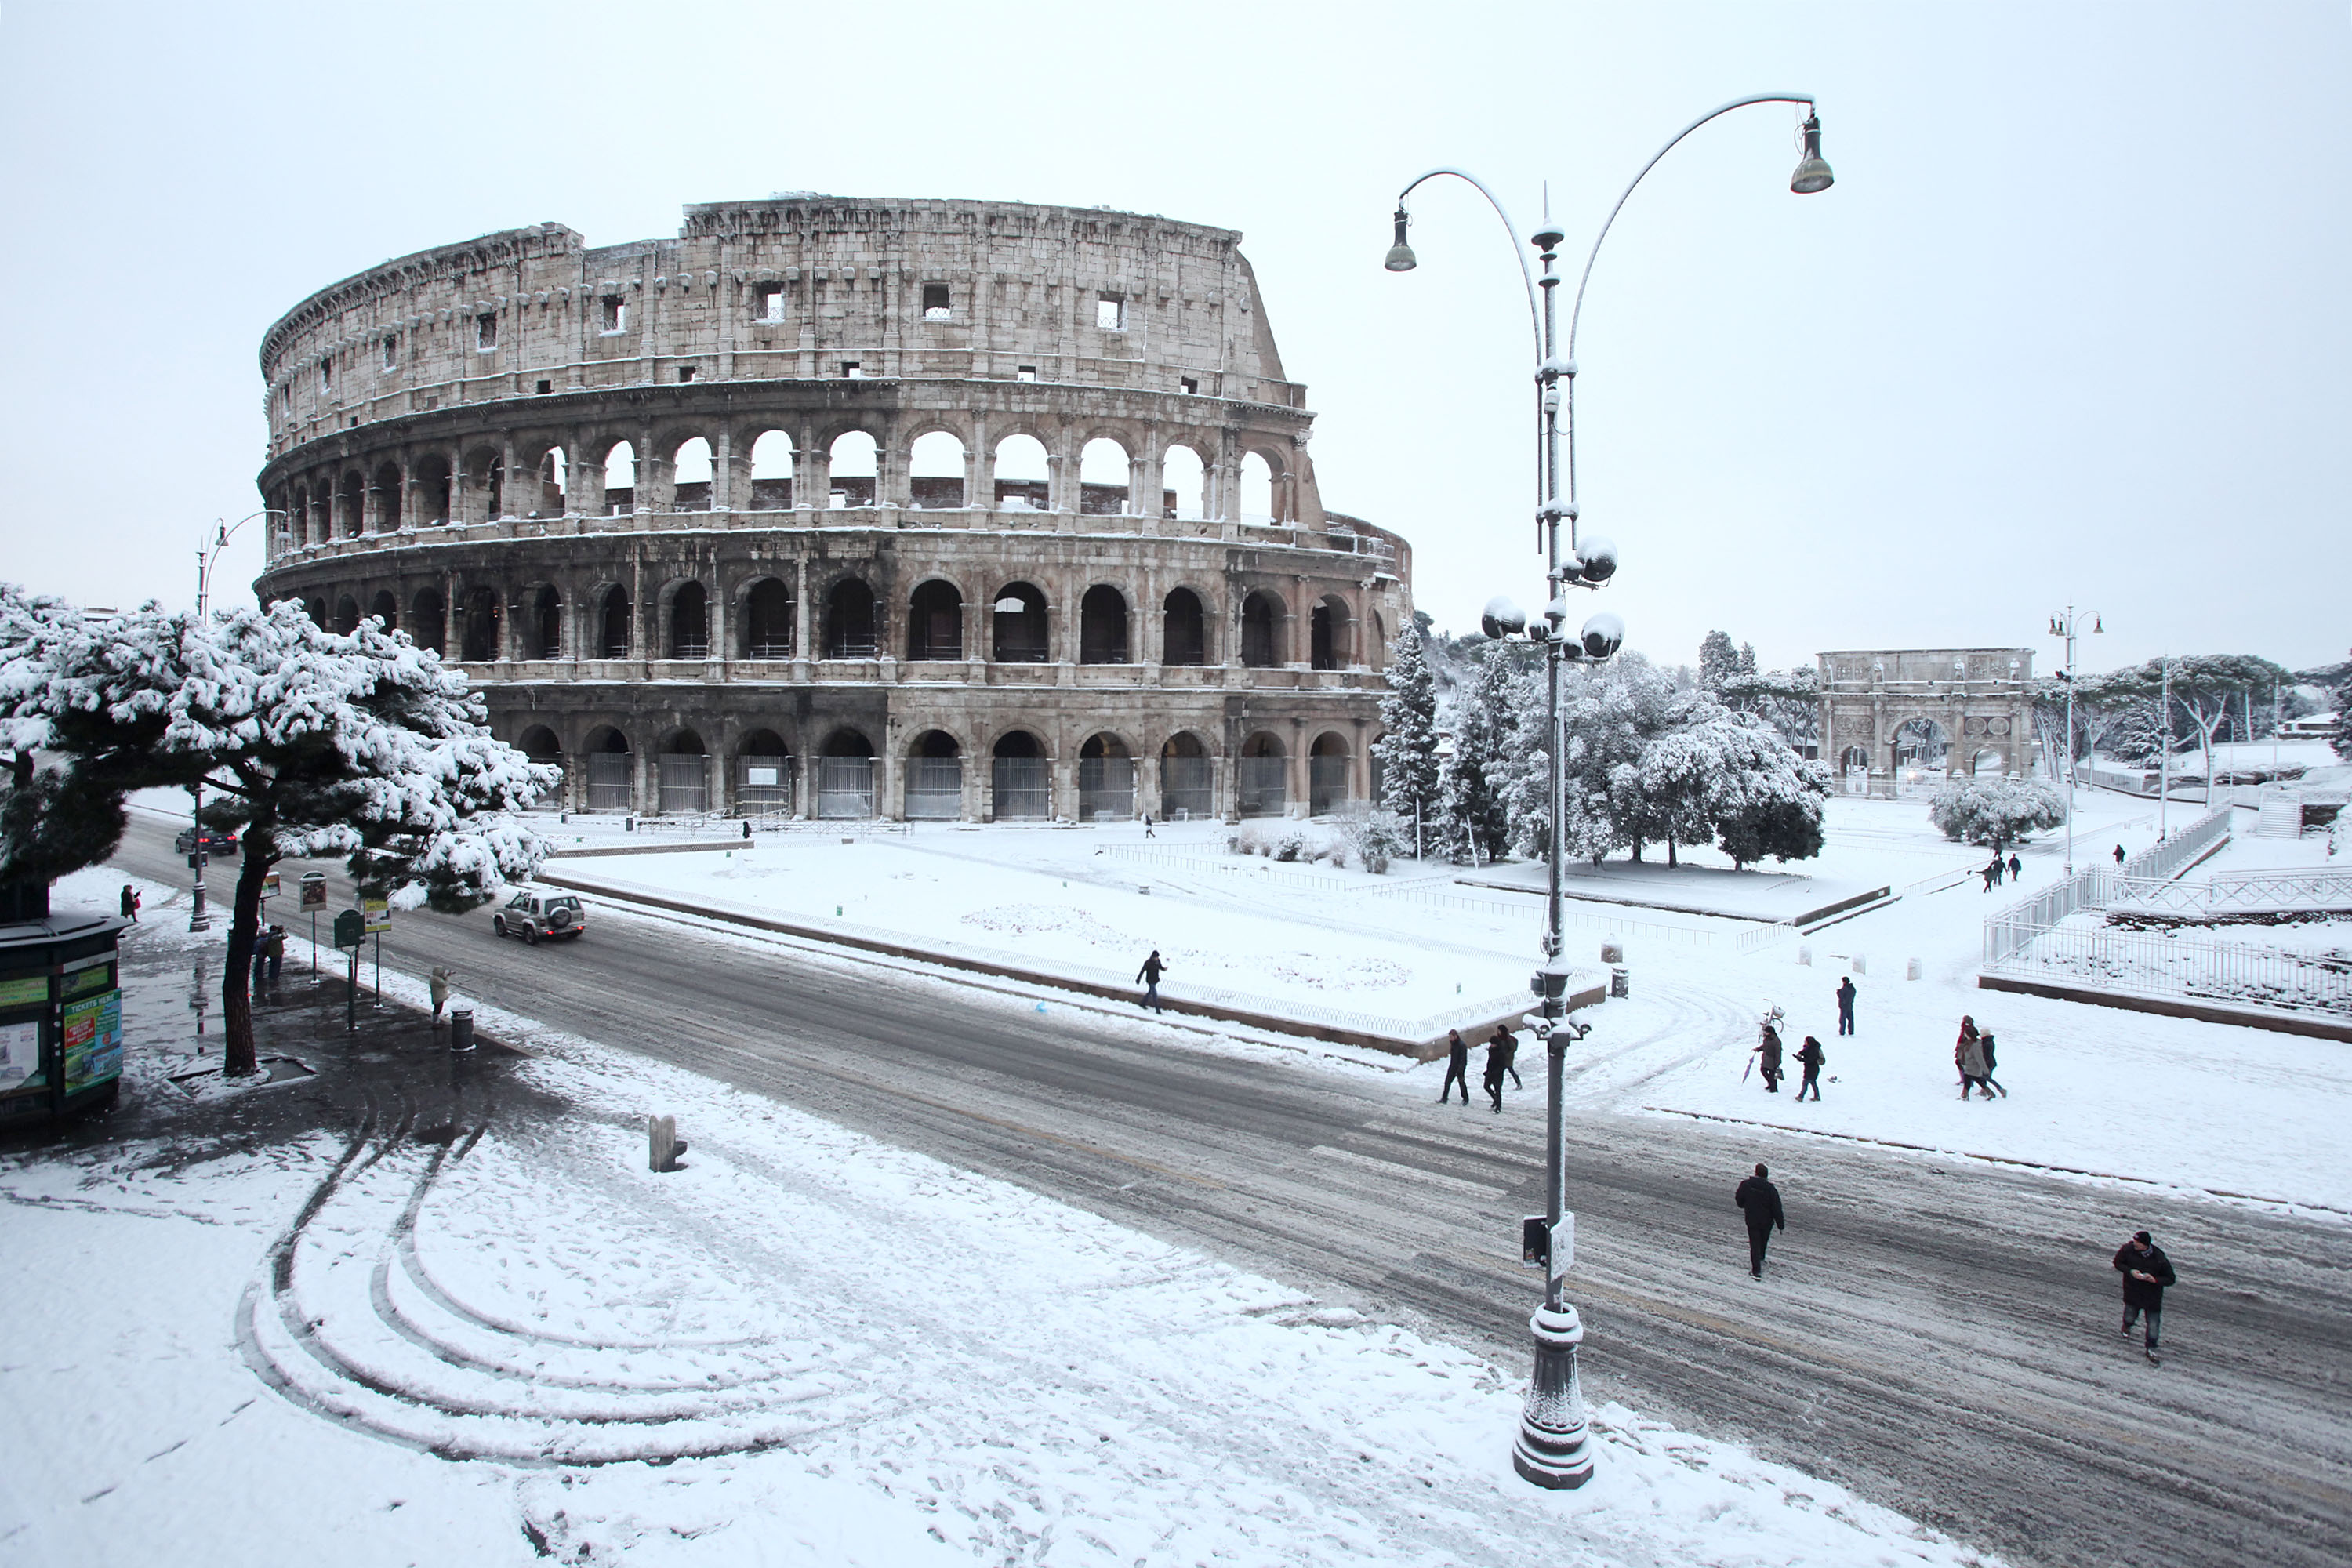 Snow falls until Rome winter 2015-2016